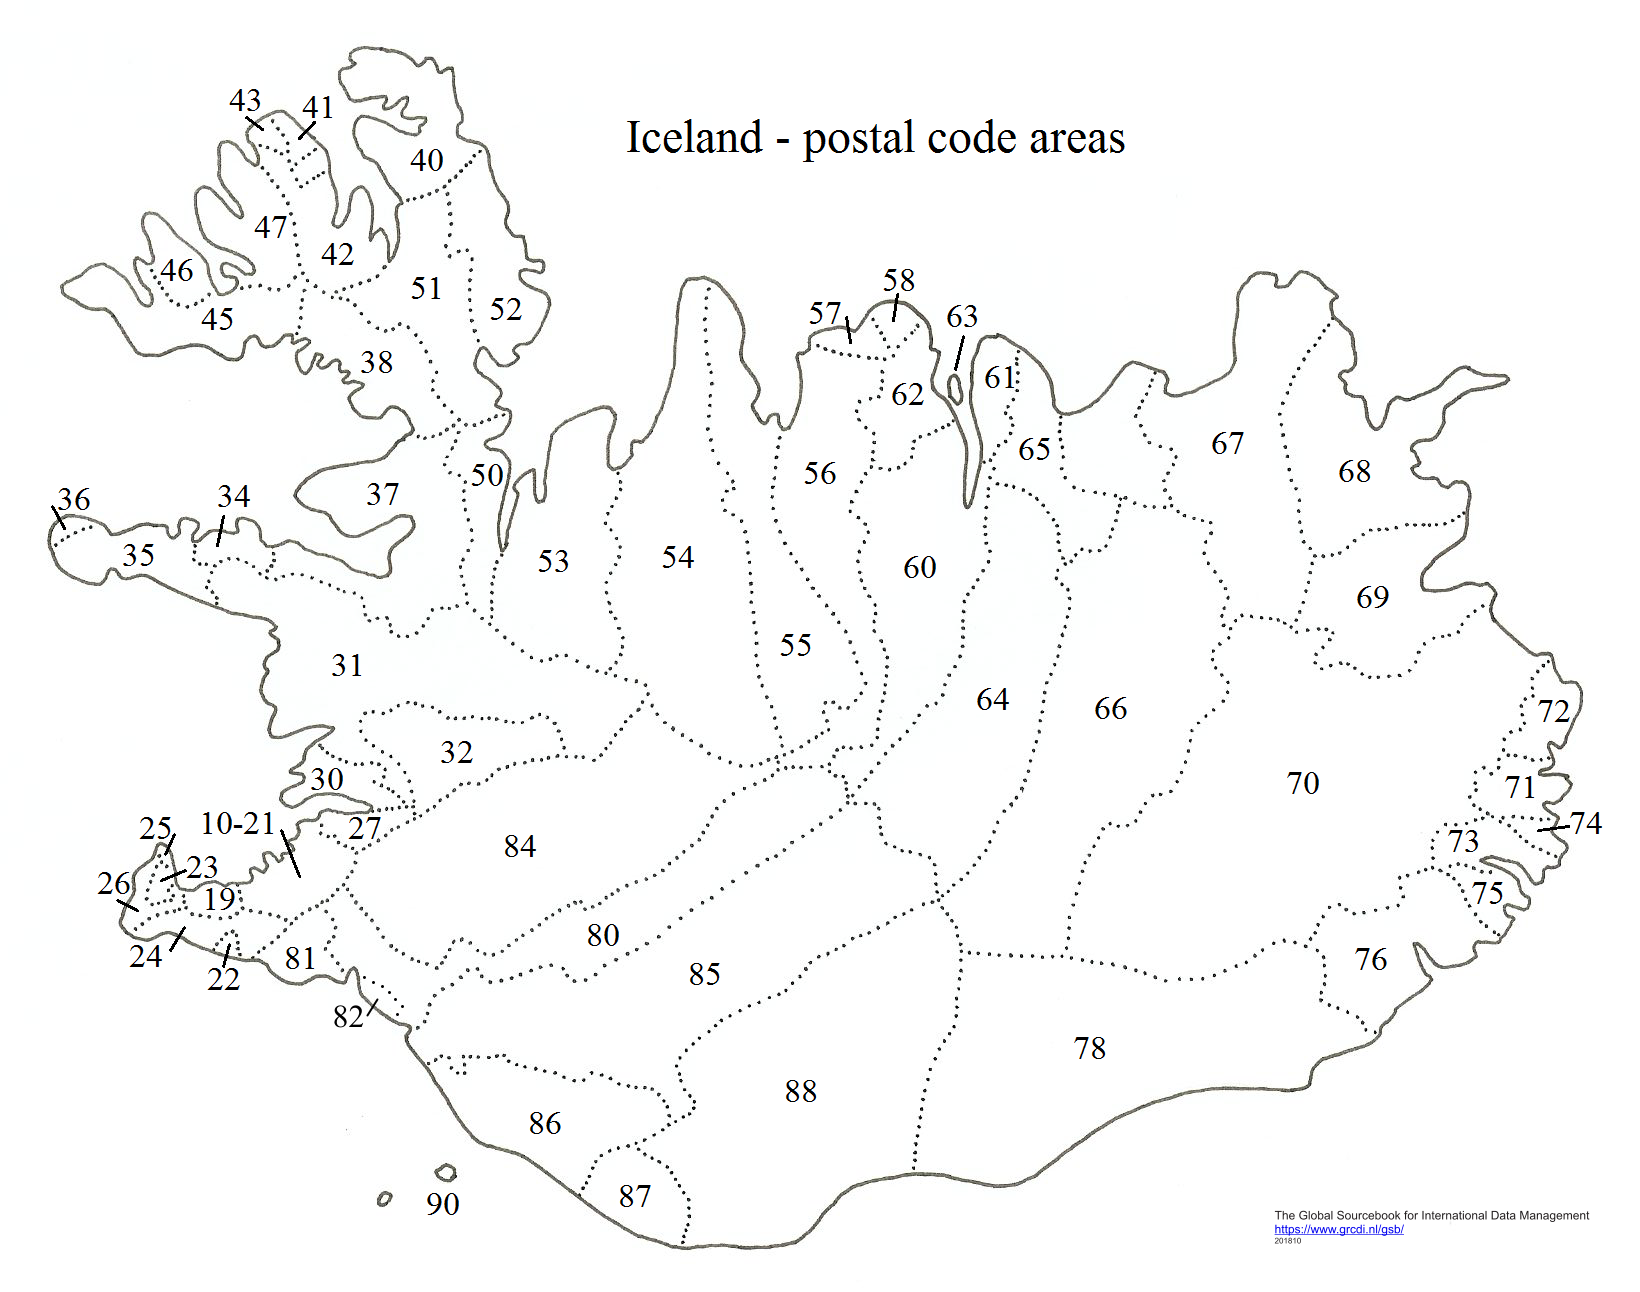 Iceland postal code areas